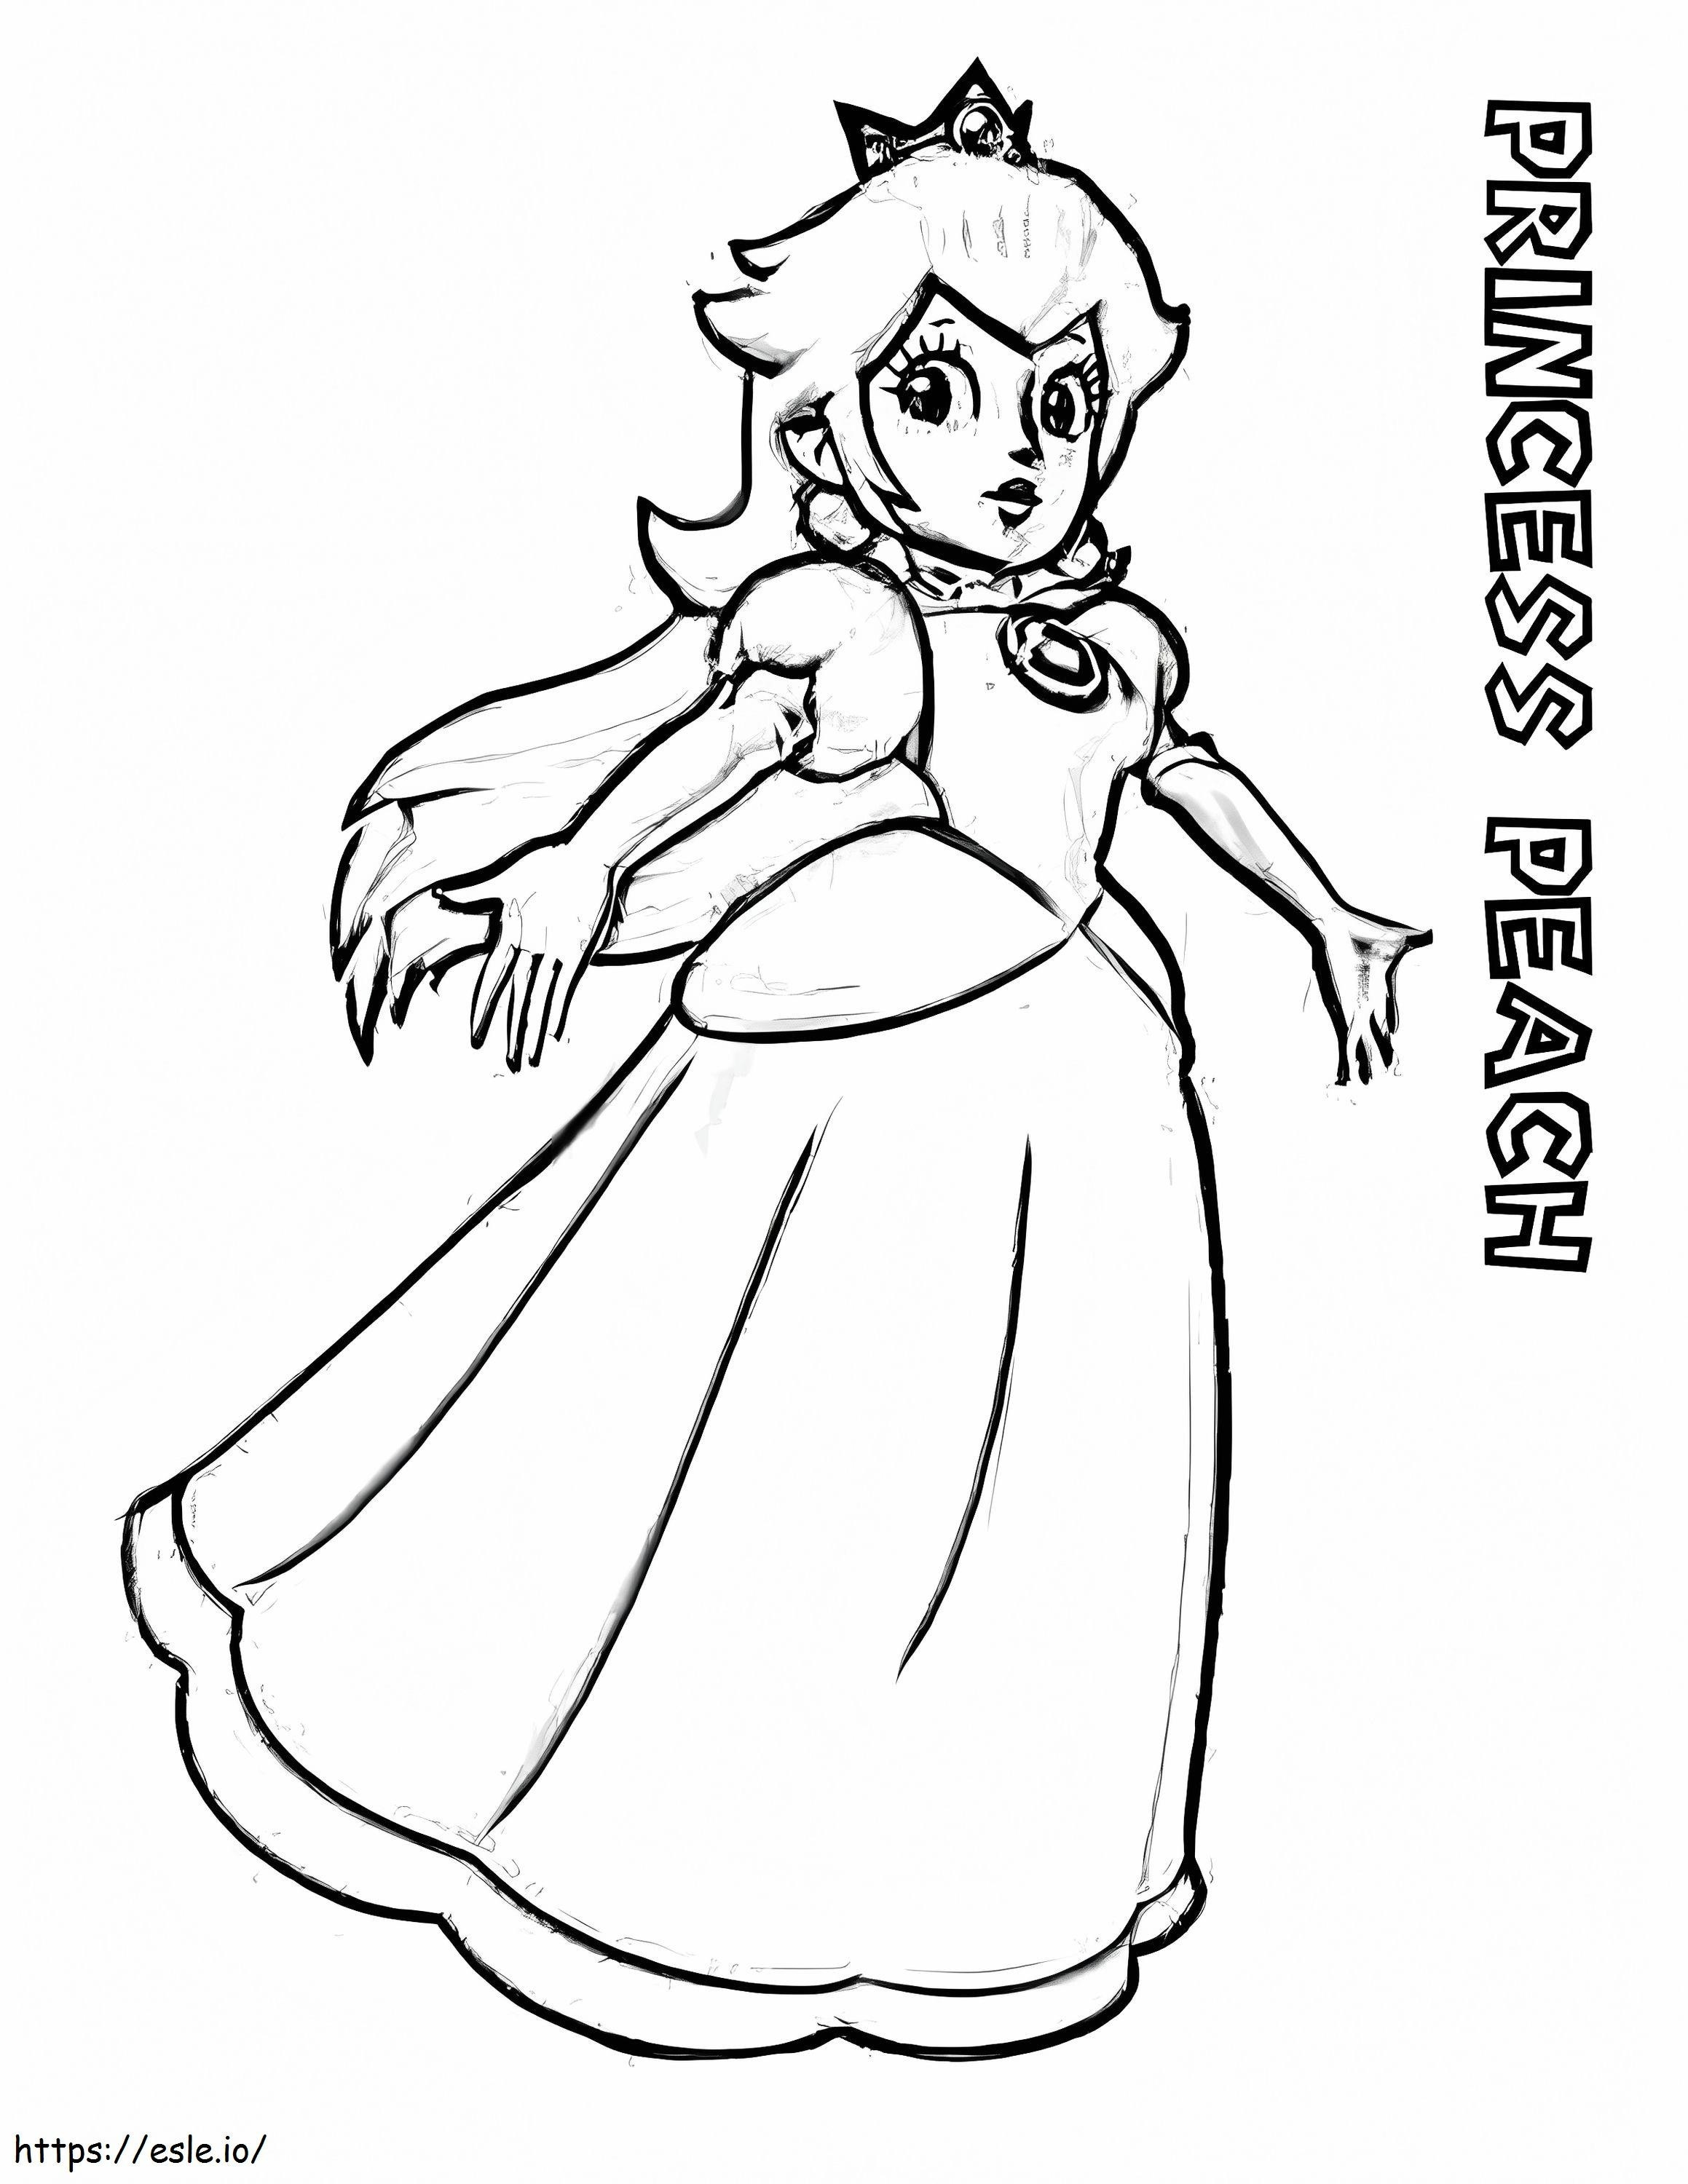 Coloriage Princesse Peach de Mario à imprimer dessin